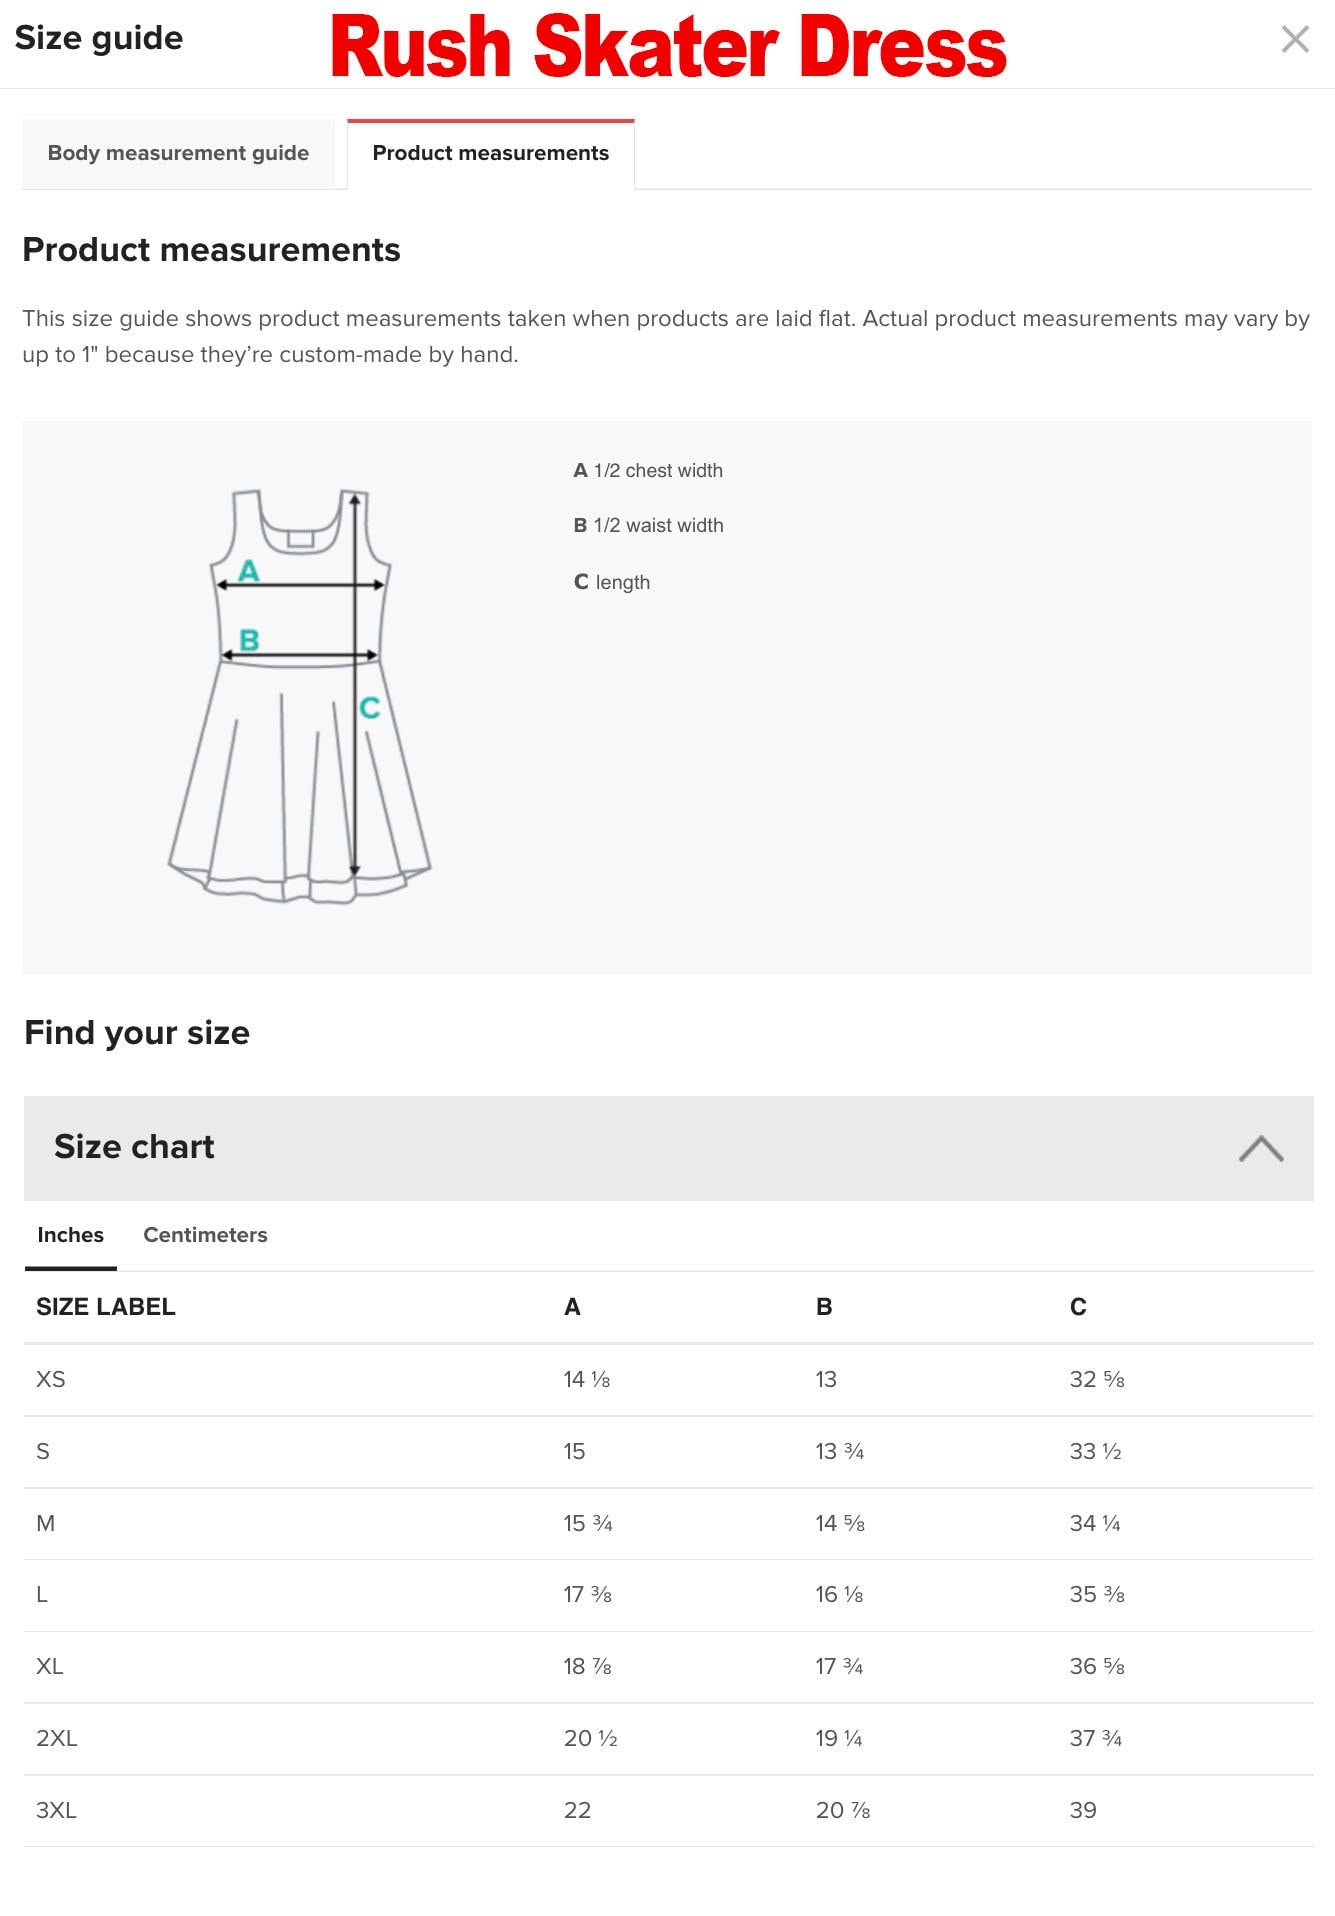 RUSH ORDER: Cinderella Pink Inspired Skater Dress